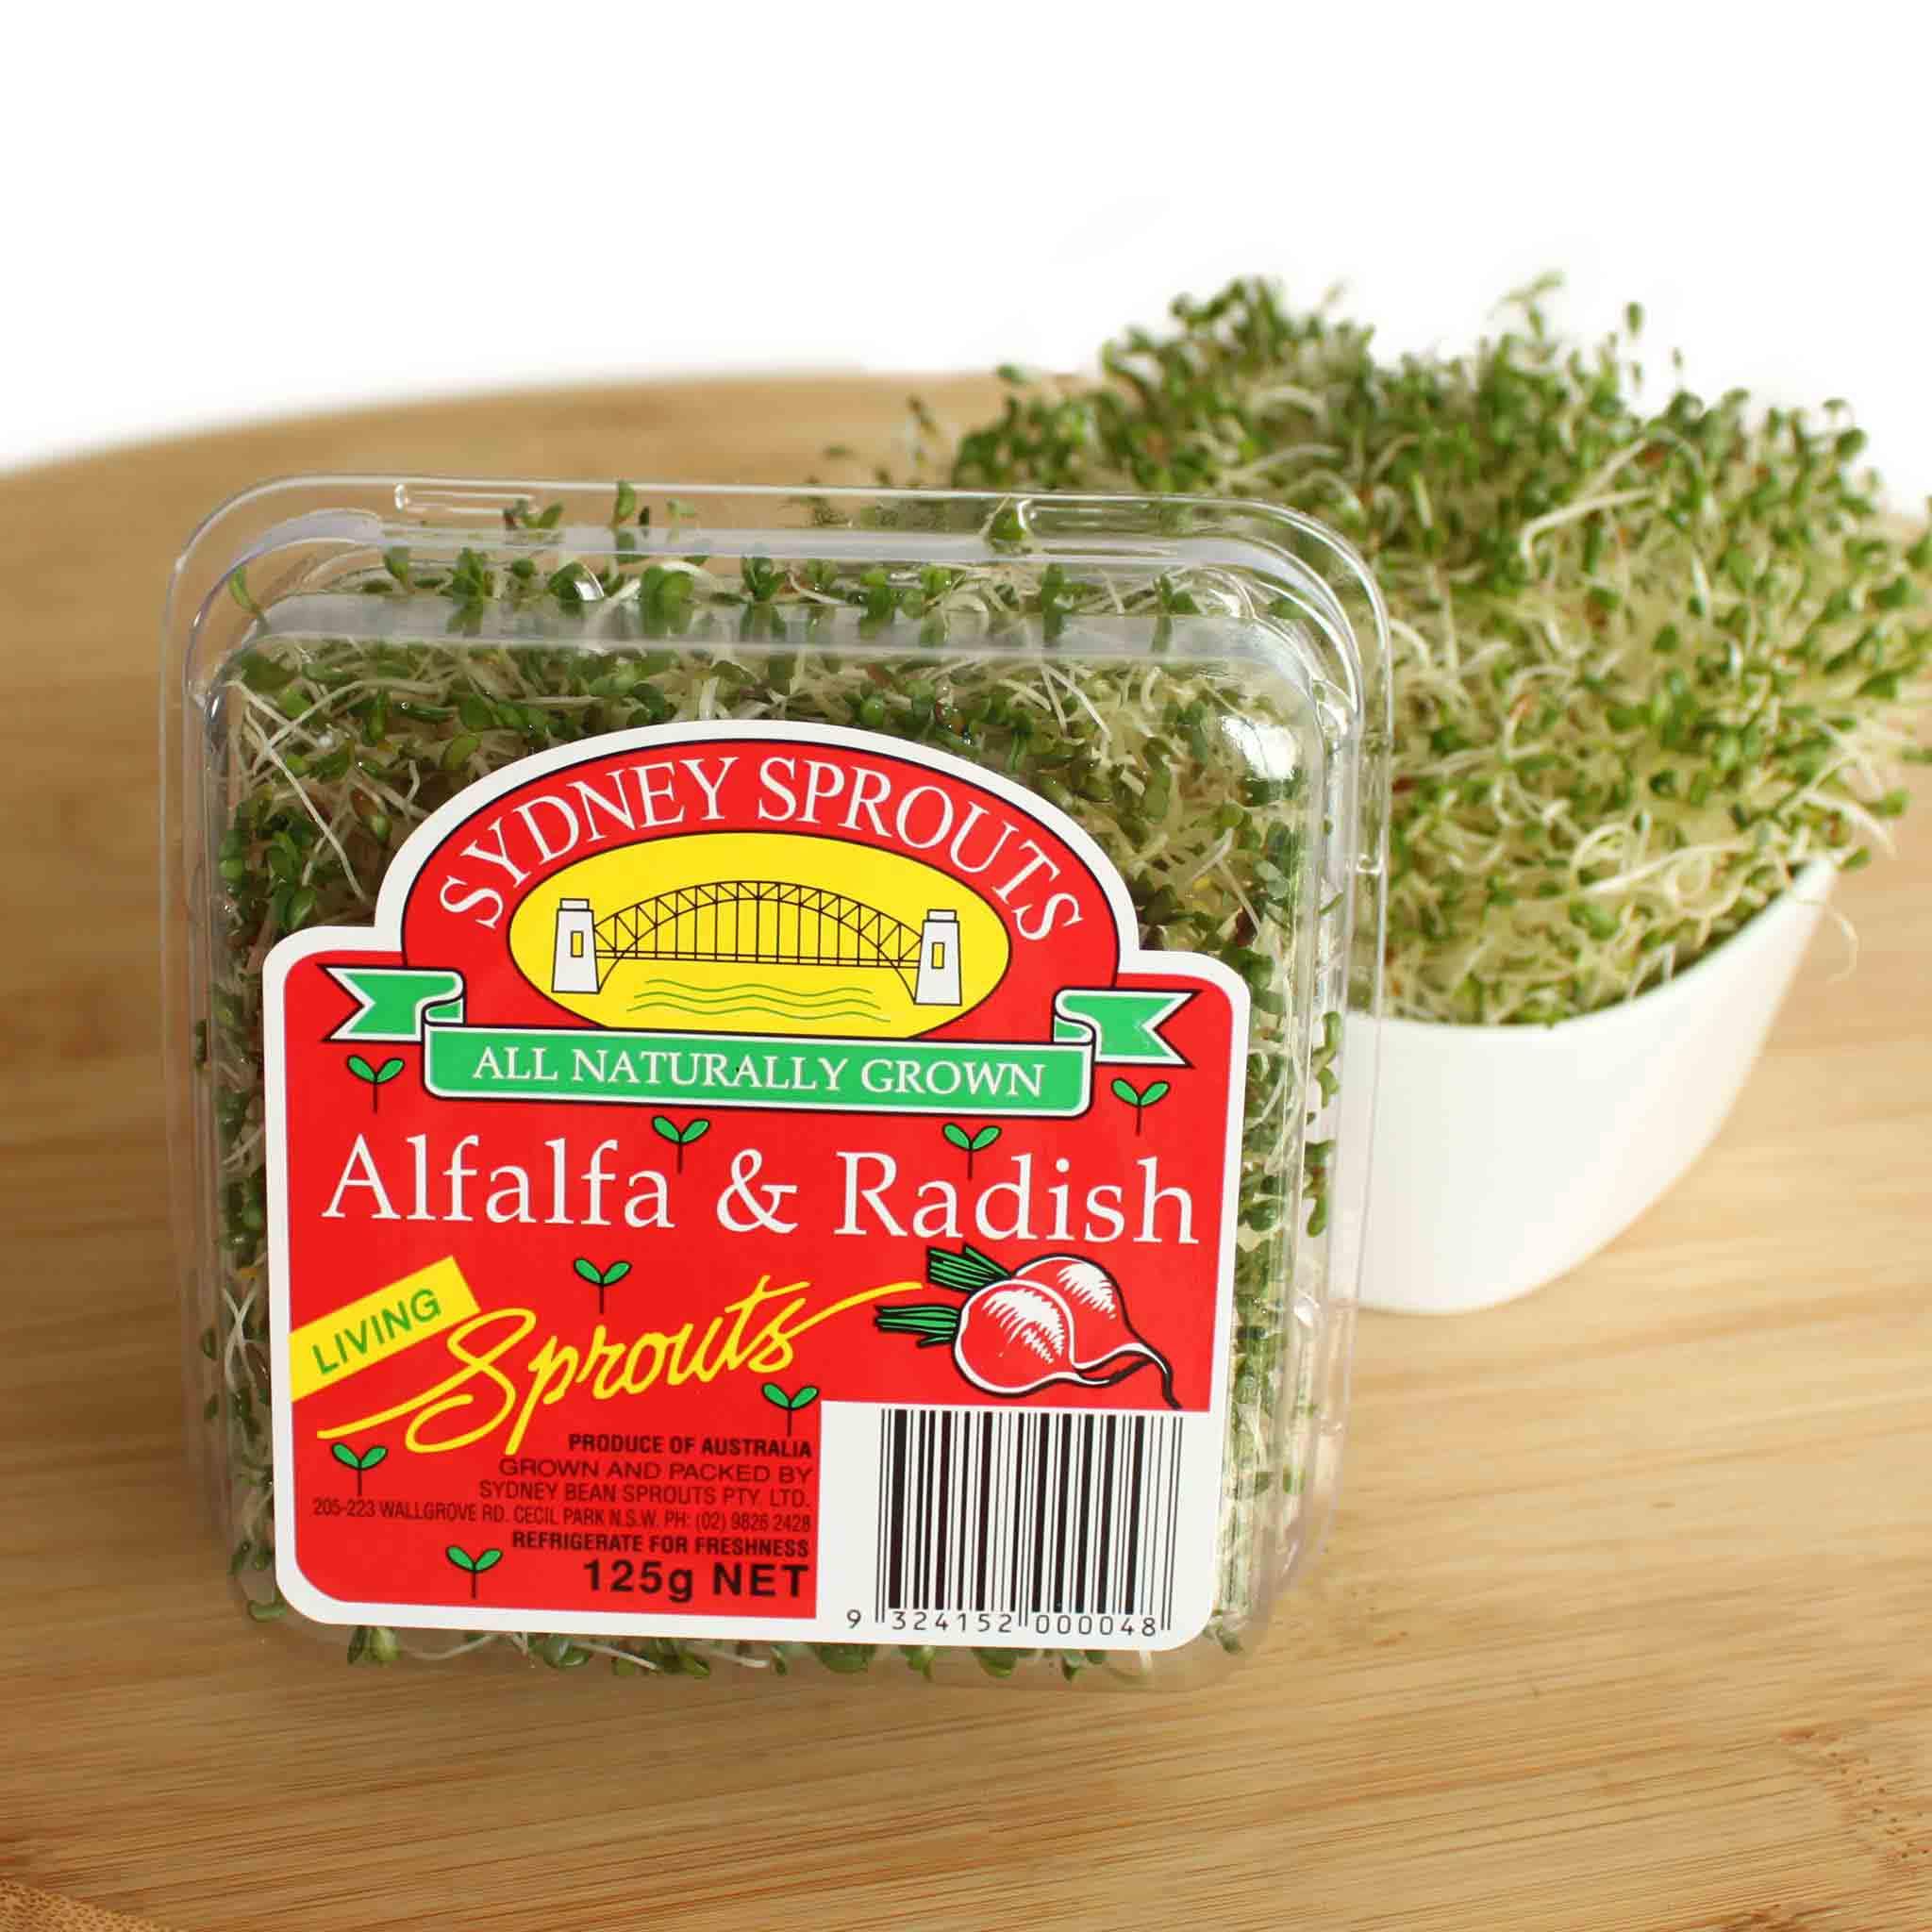 Alfalfa & Radish Sprouts